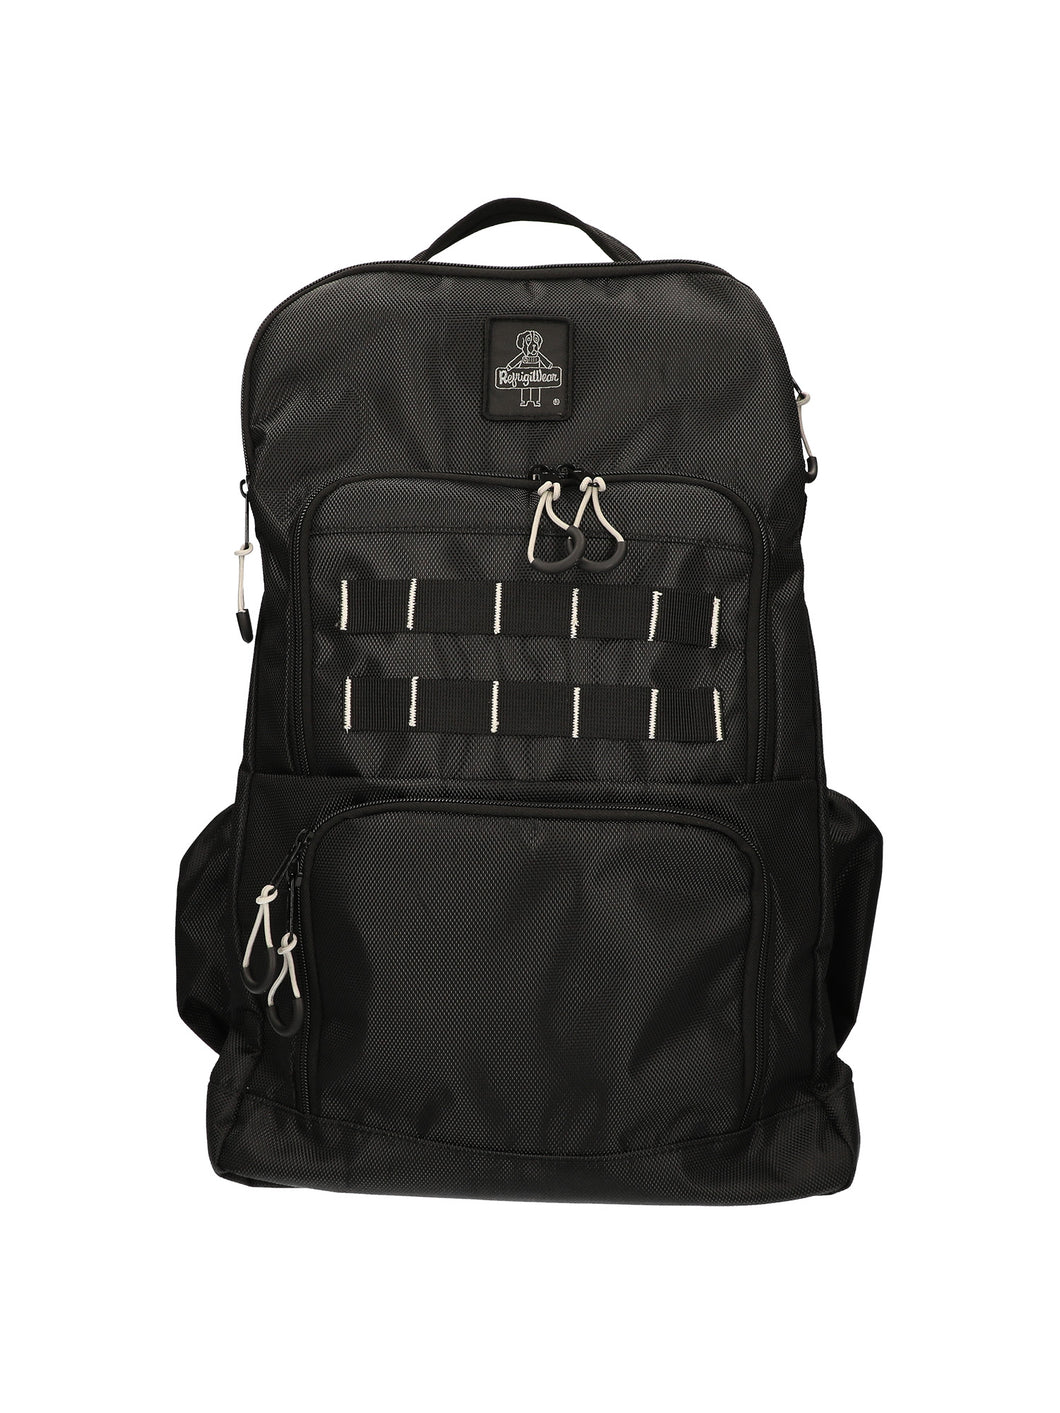 995 RefrigiWear® Travel Backpack